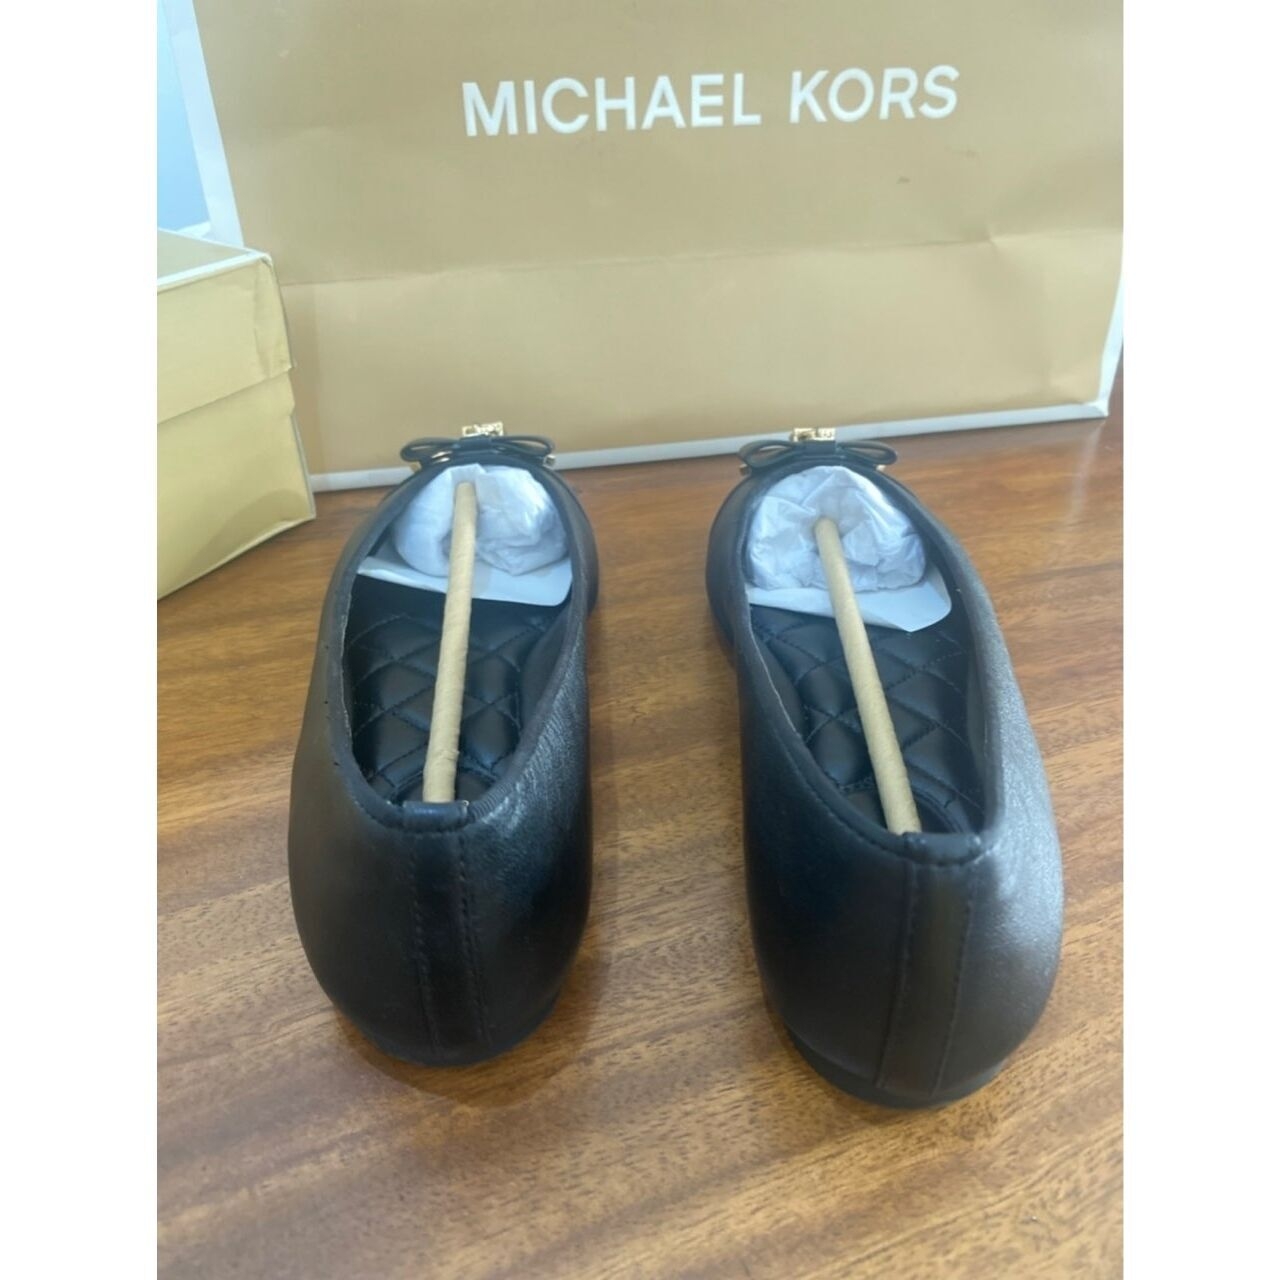 Michael Kors Alice Ballet Black Flats